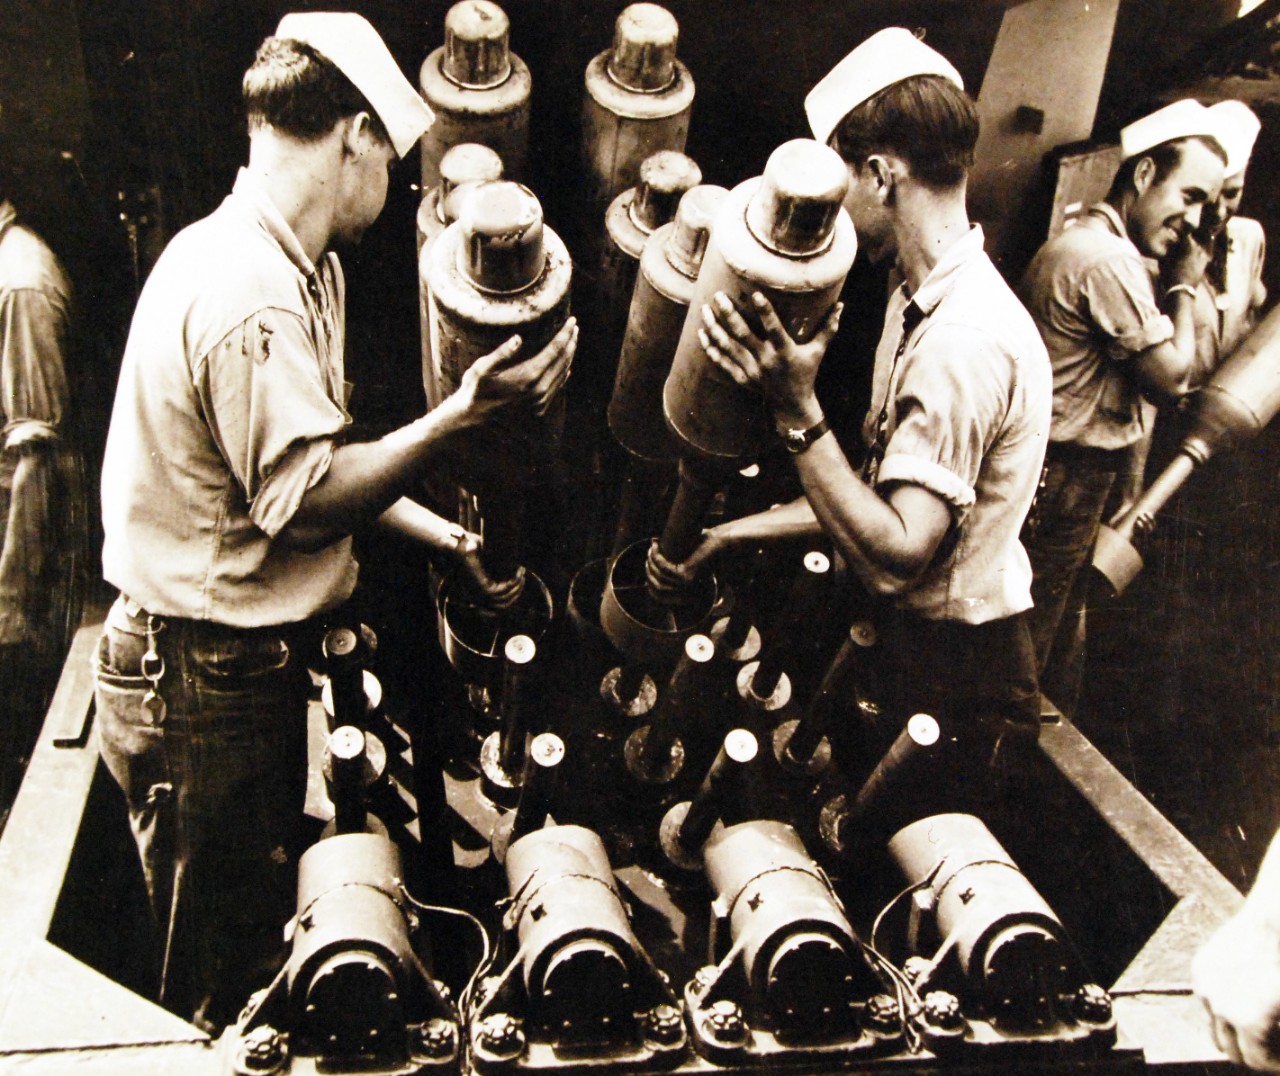 <p>80-G-701378: Battle of the Atlantic: Anti-Submarine Warfare: Hedgehog. “Hedgehog” bomb projectors used in anti-submarine warfare. Photograph released October 1945.&nbsp;</p>
